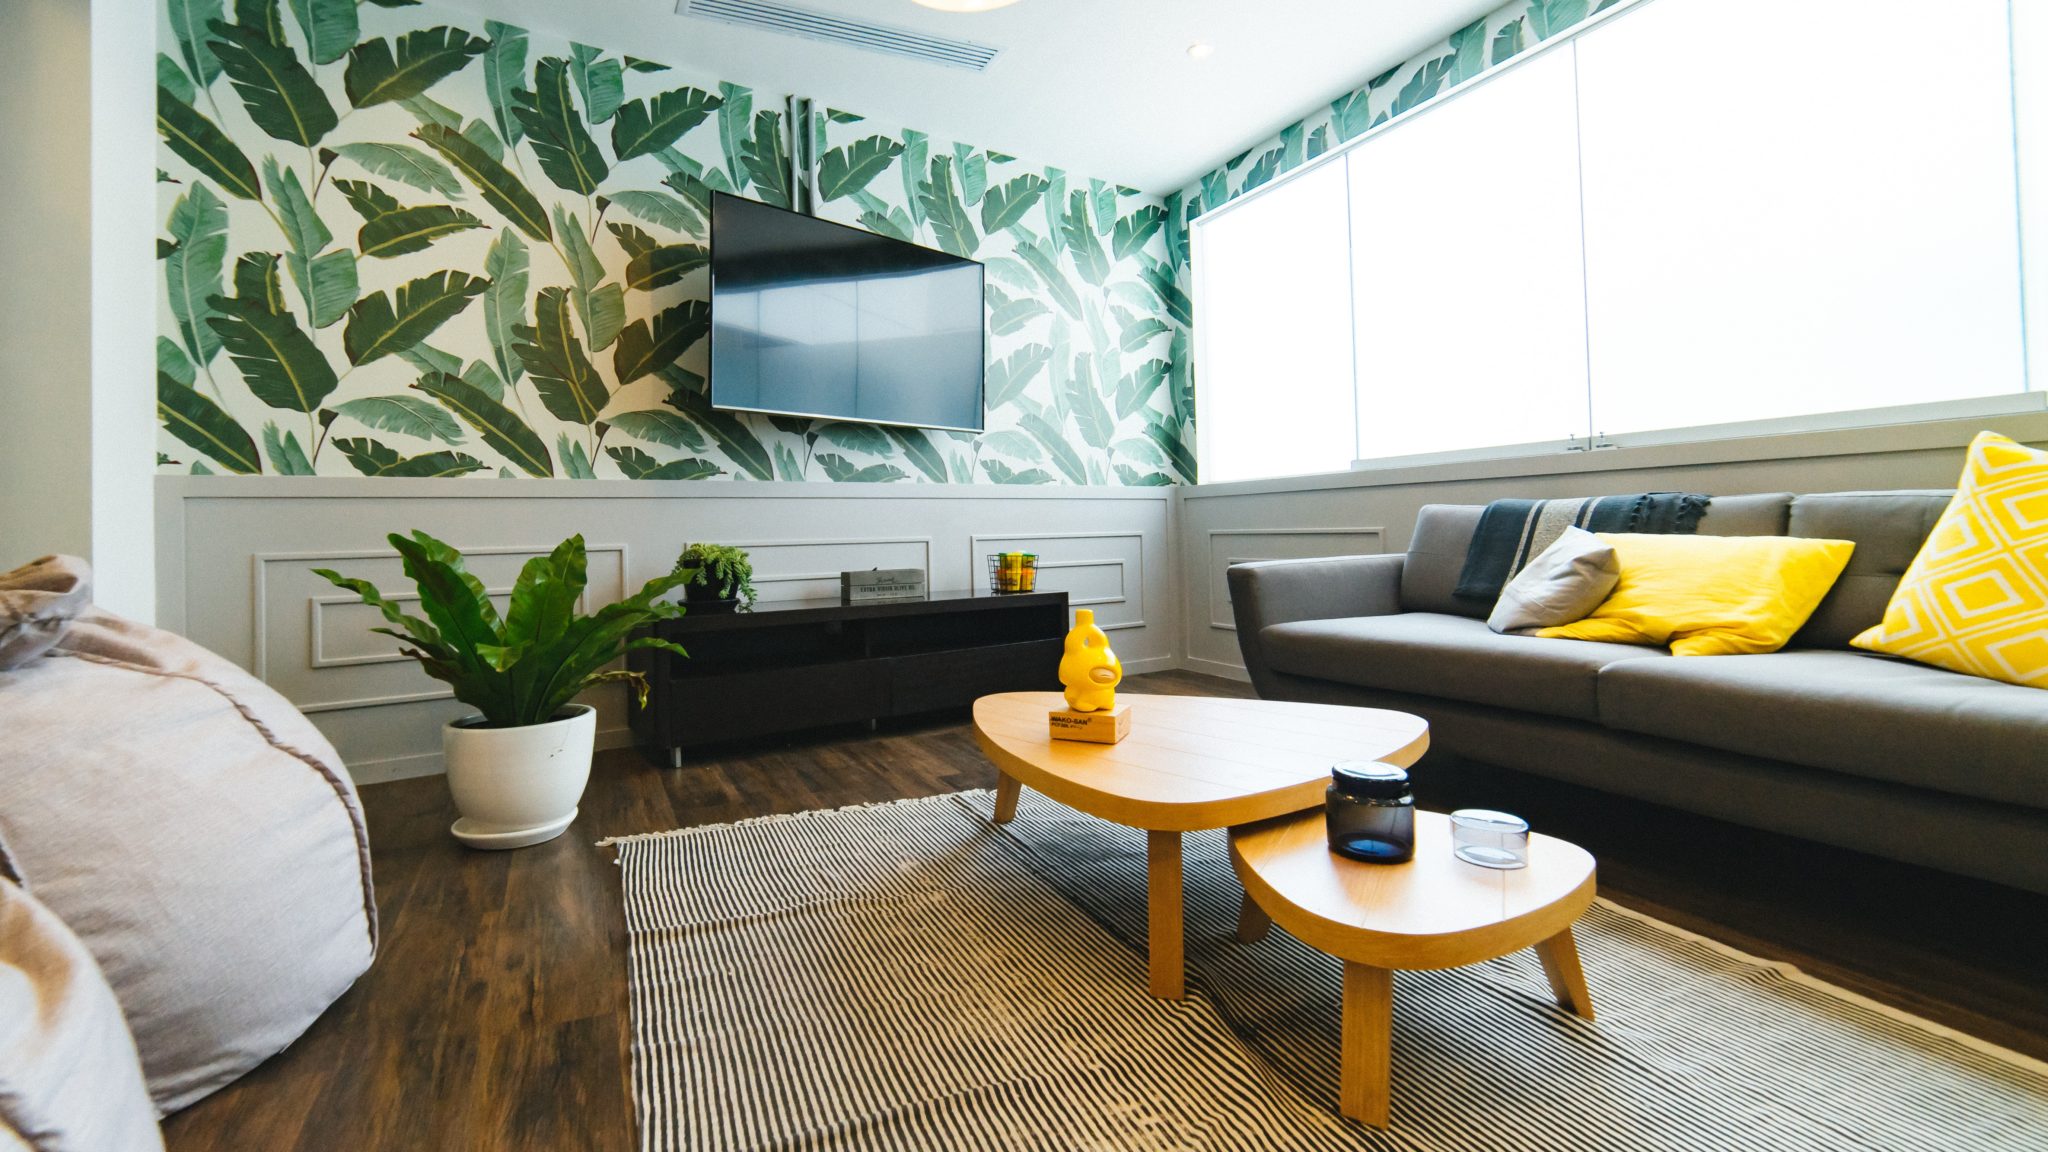 Living room interior design with decorative wallpaper